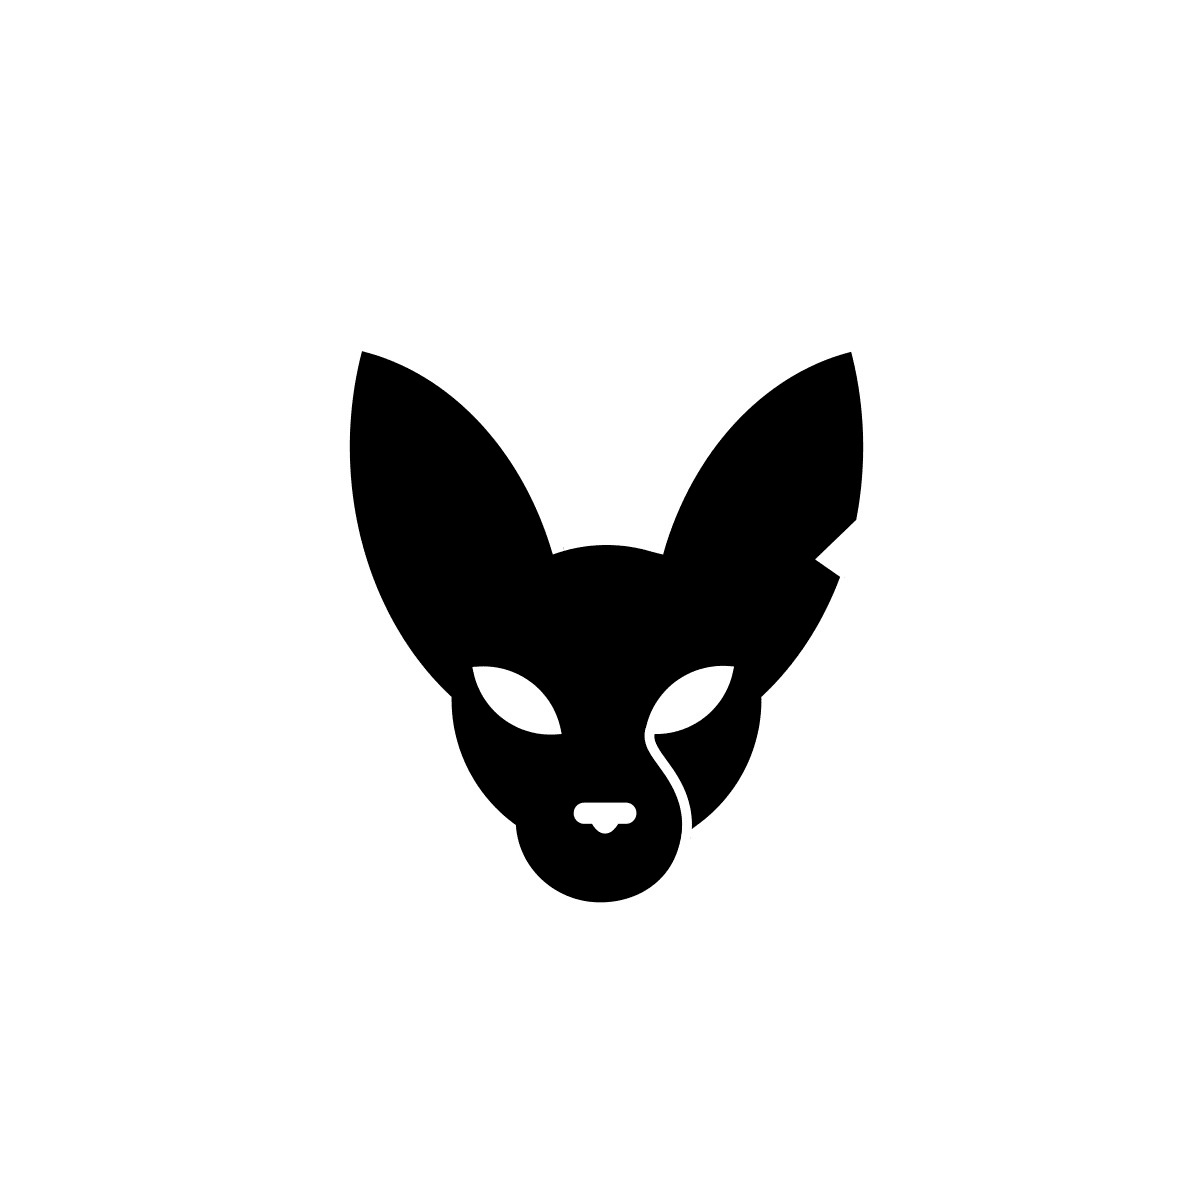 Design a minimalist and geometric animal logo by Alexxegagne | Fiverr